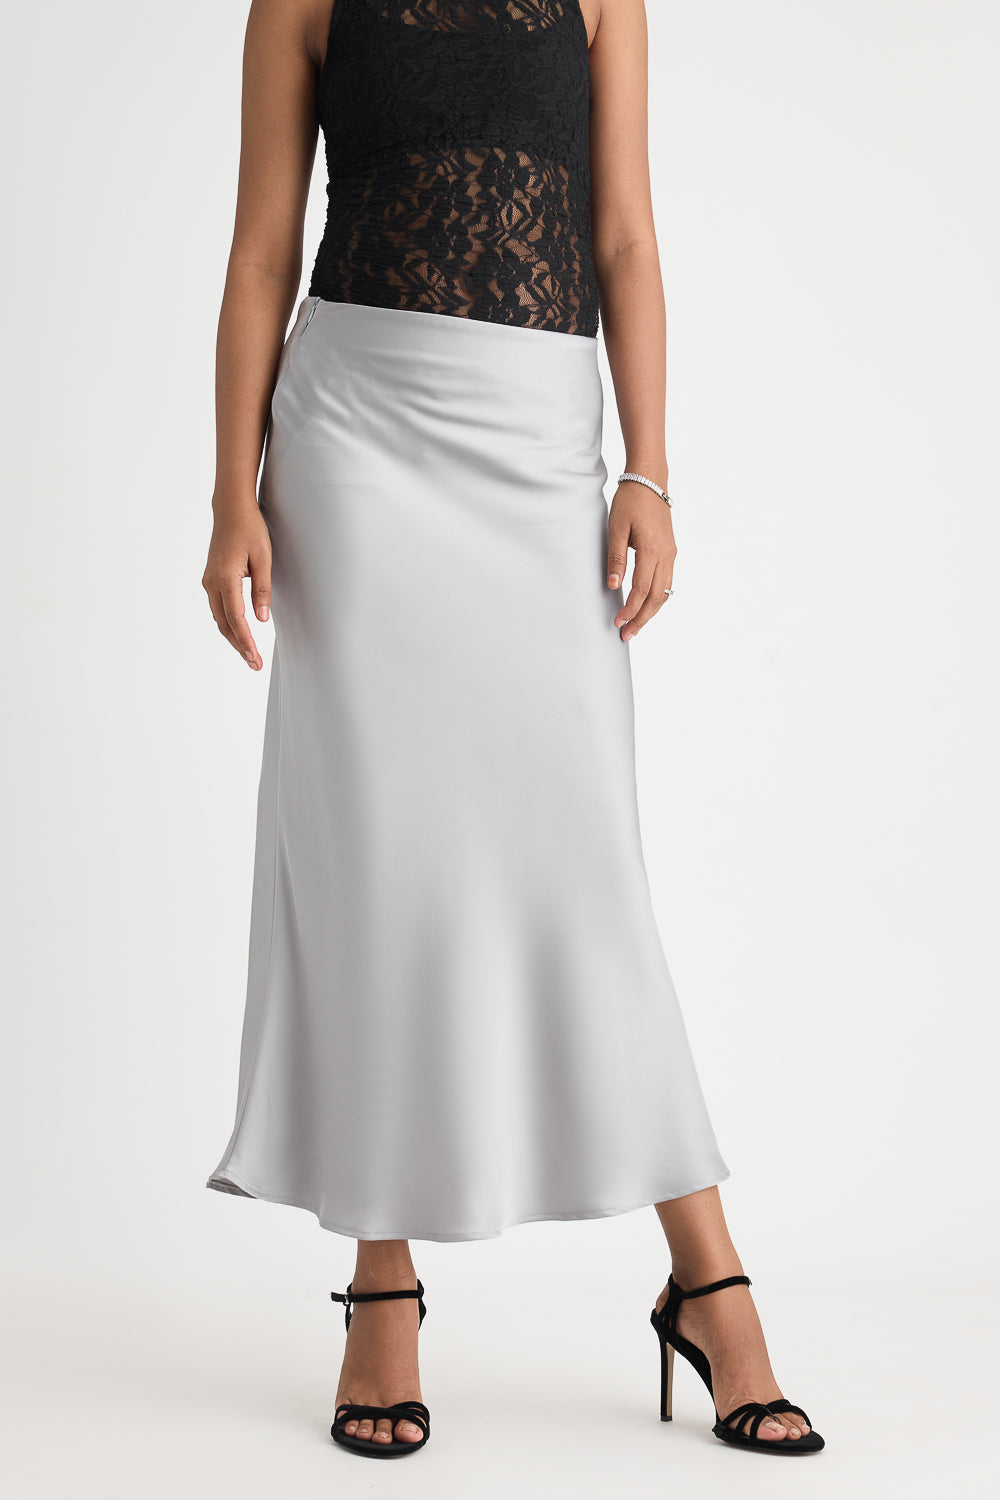 Light Grey Satin Skirt